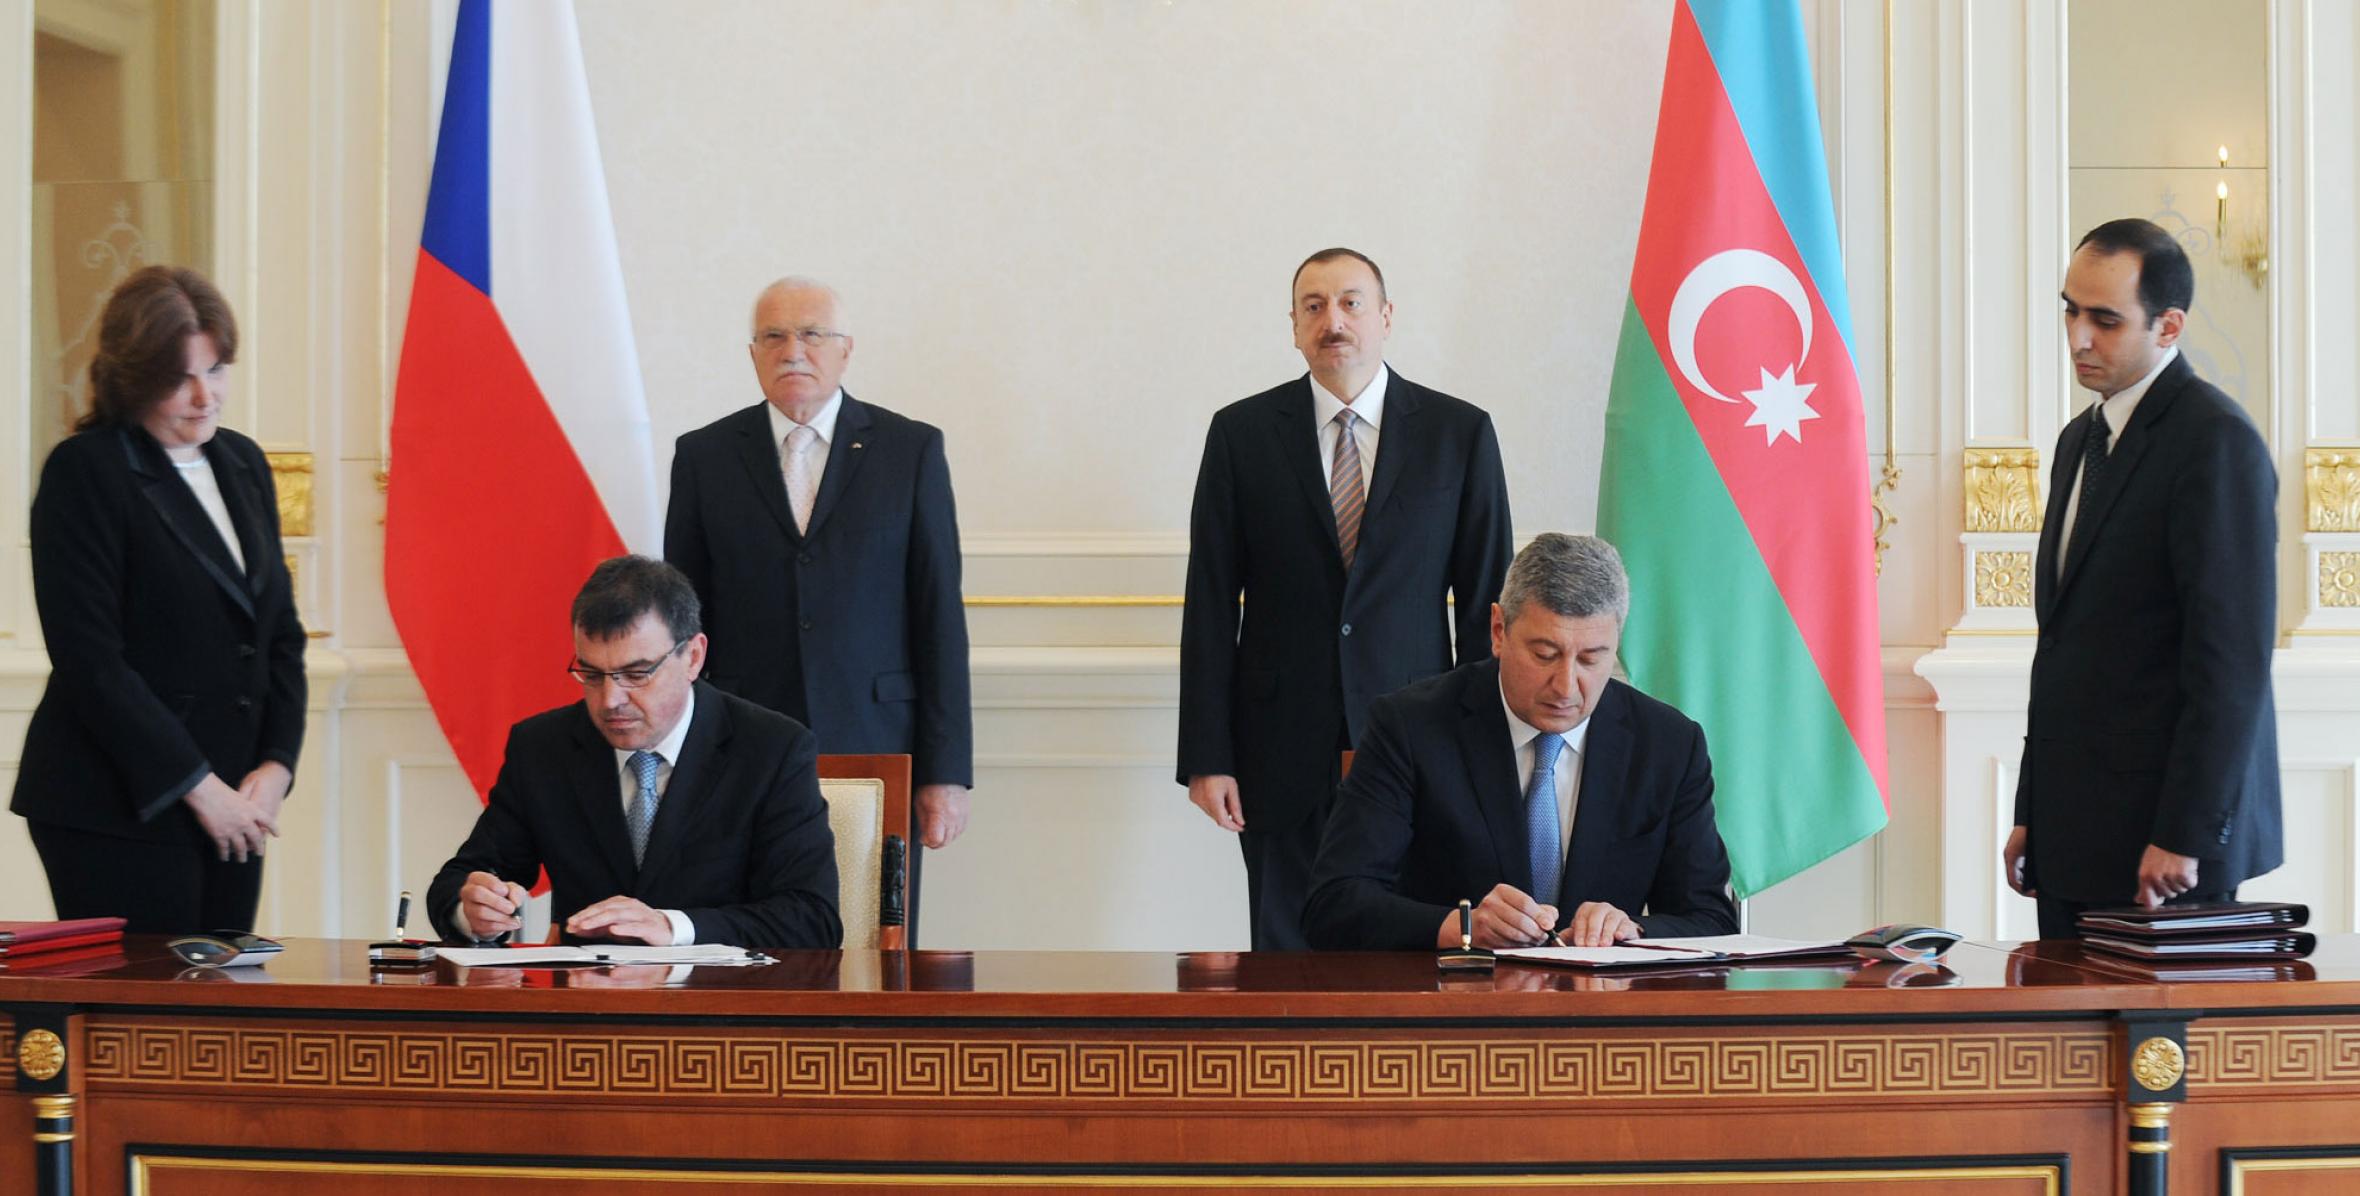 Signing ceremony of Azerbaijani-Czech documents took place